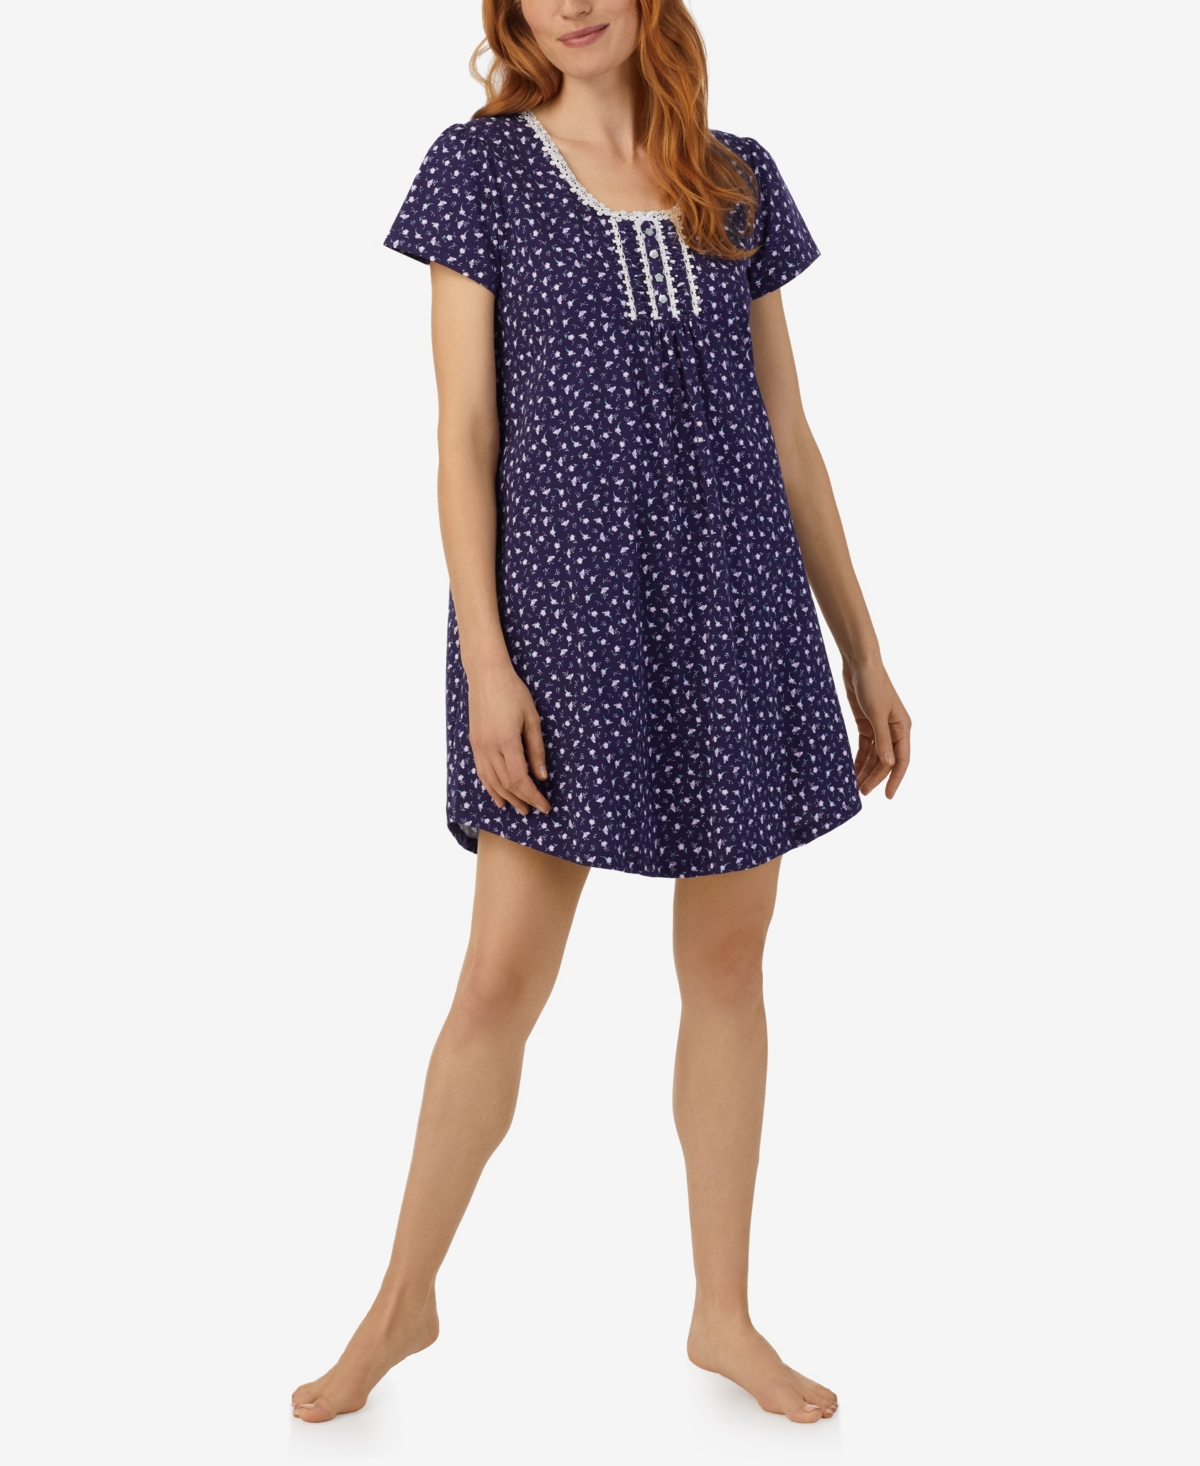 Women's Cap Sleeve Sleepshirt Nightgown - Floral Print